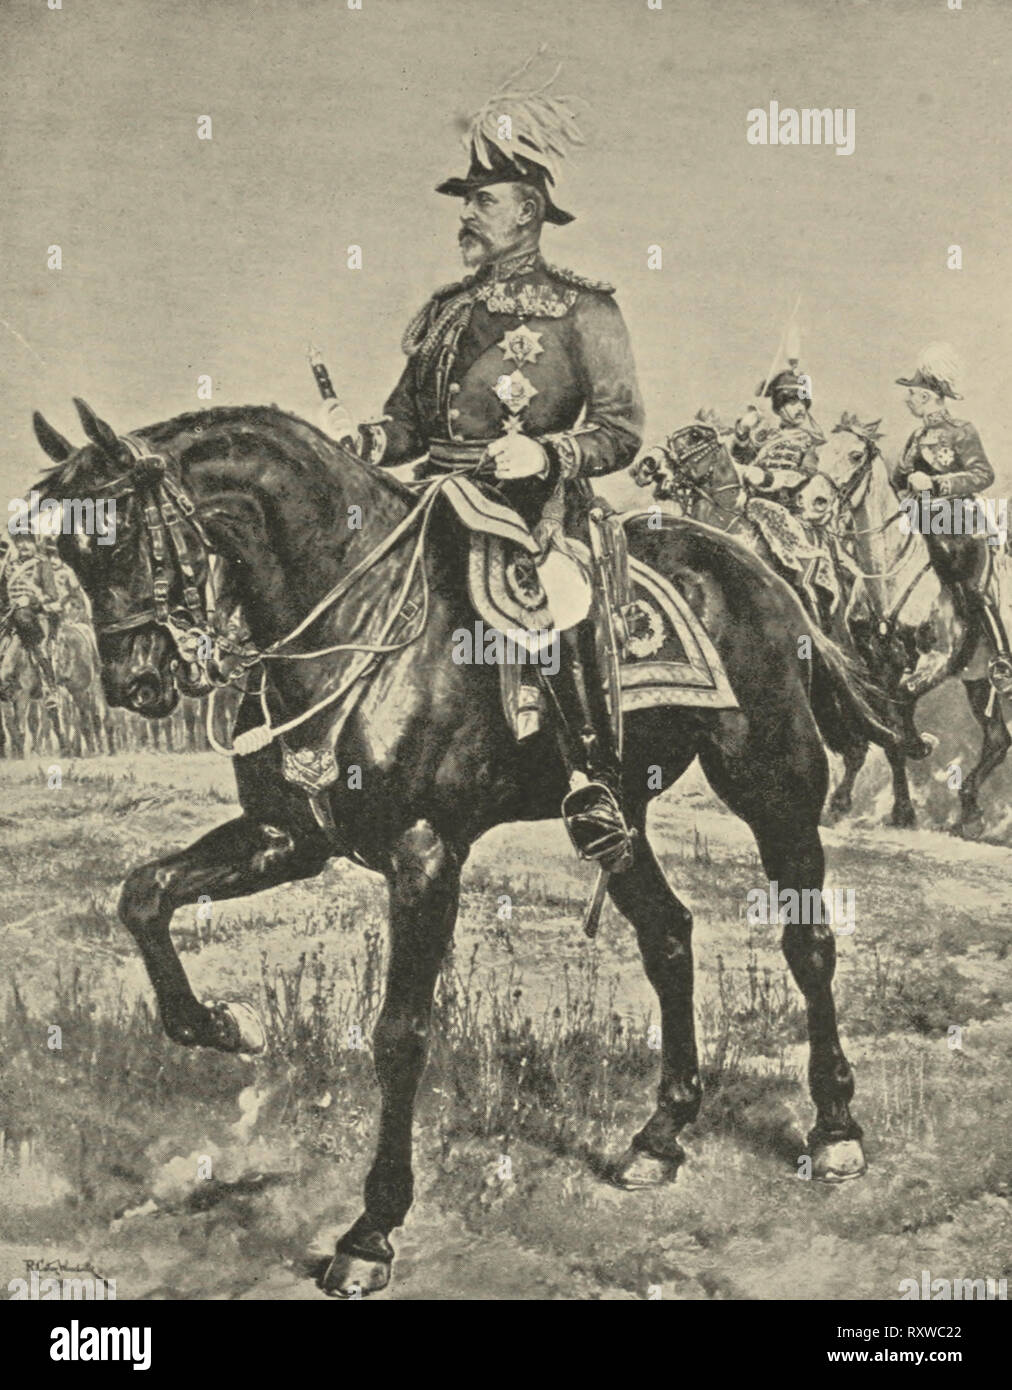 King Edward VII en su uniforme como mariscal de campo Foto de stock